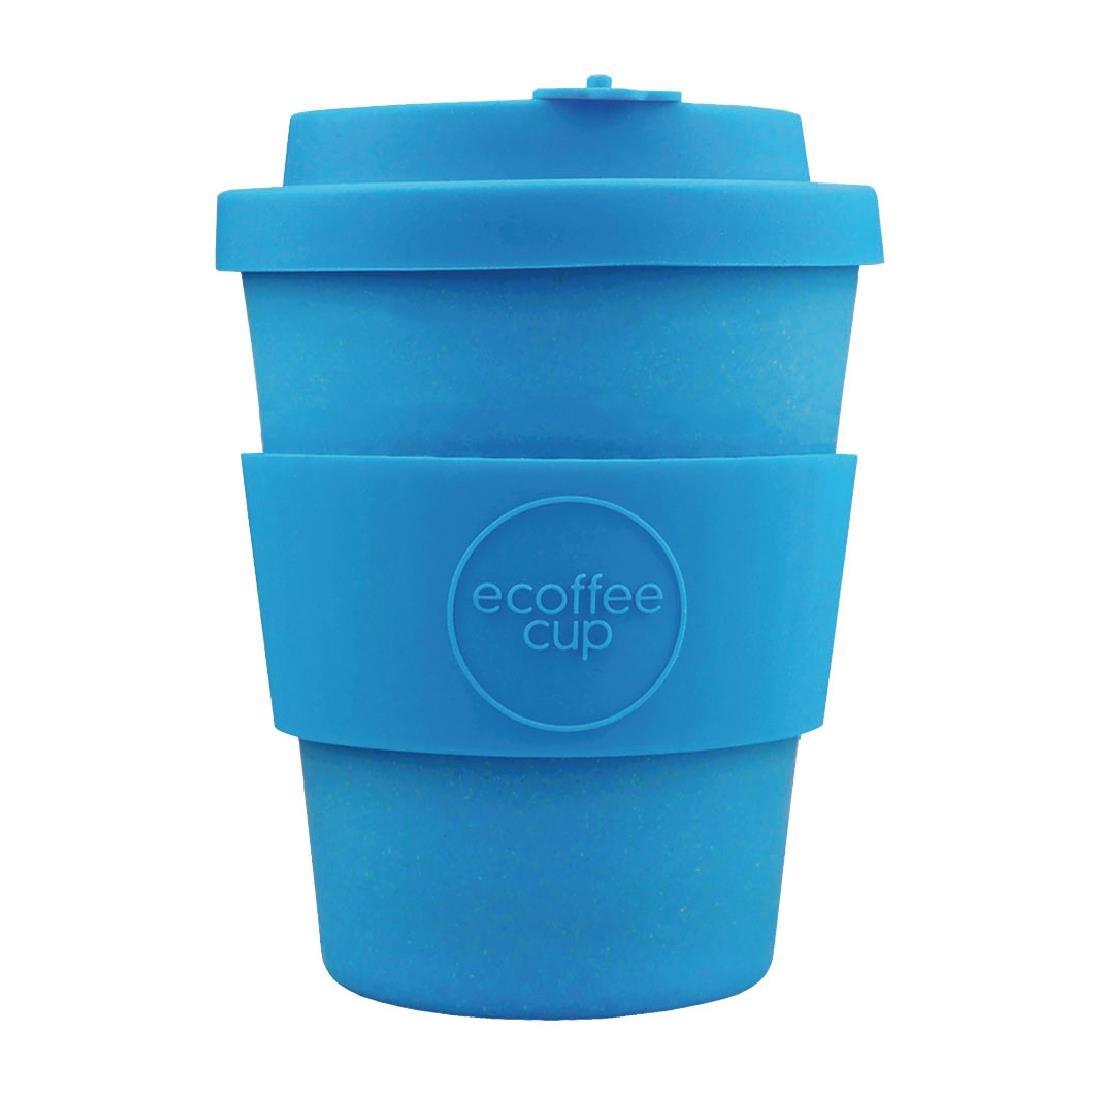 Ecoffee Cup Bamboo Reusable Coffee Cup Toroni Blue 12oz - DY485  - 1